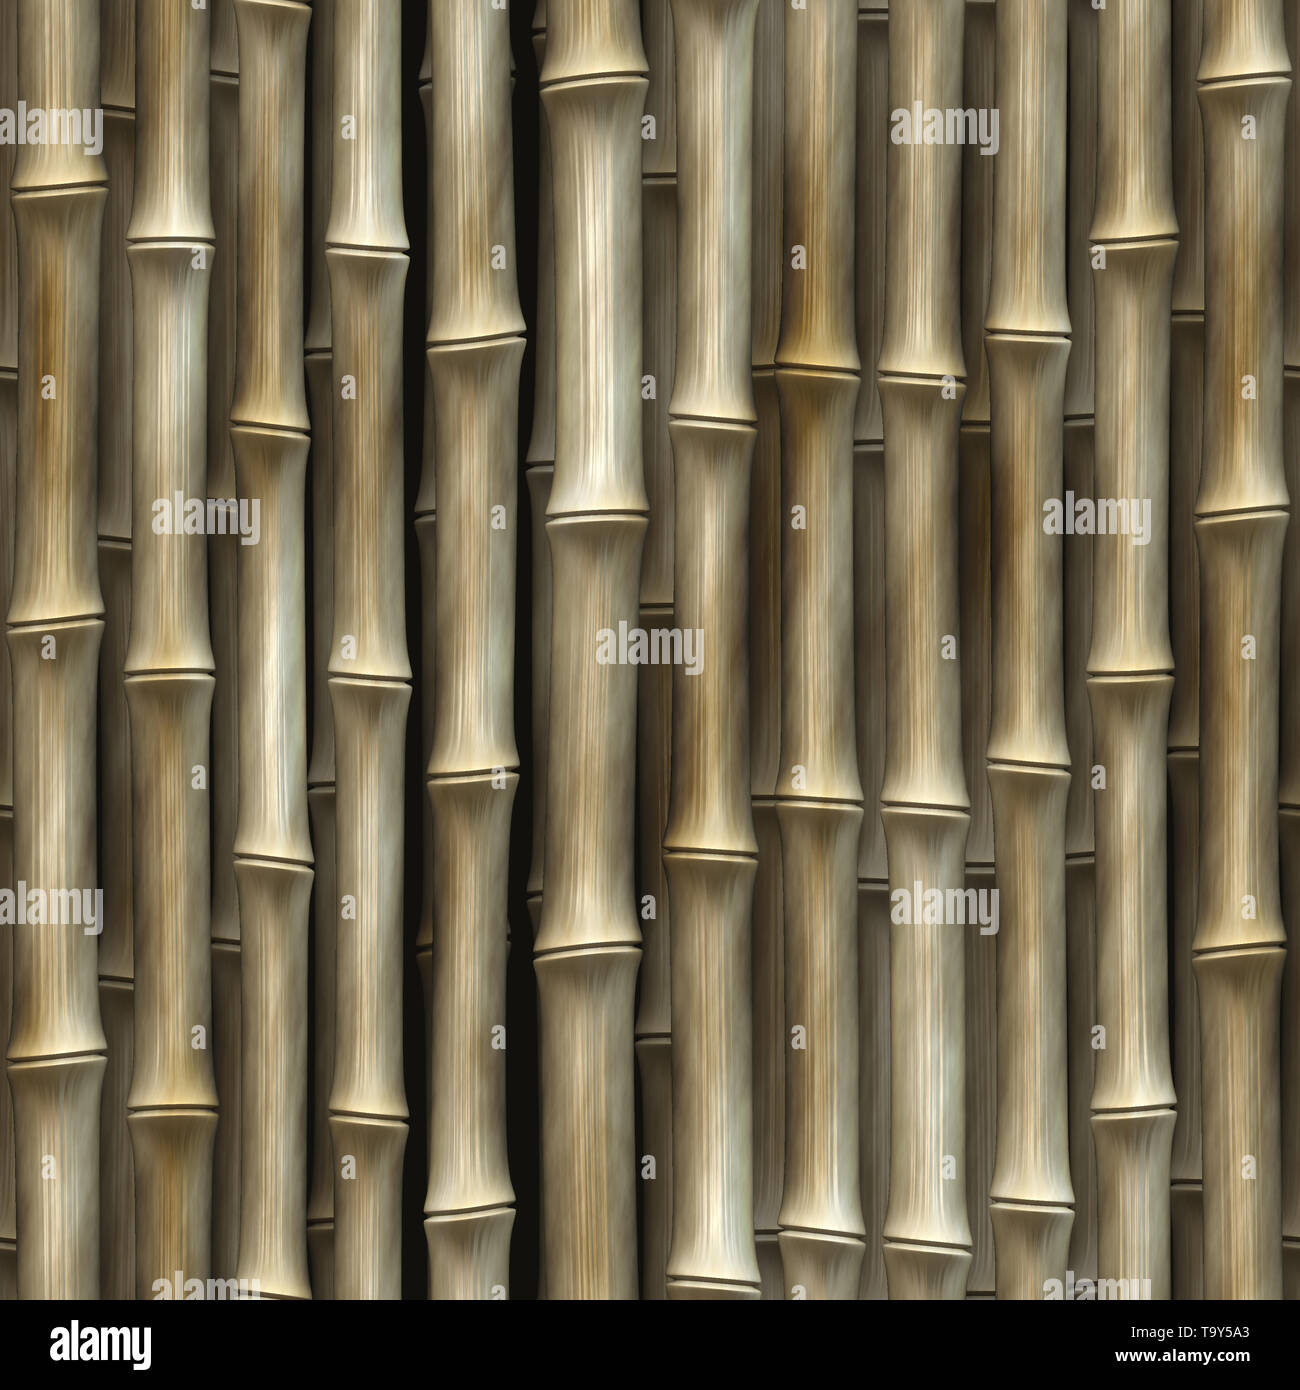 Bamboo Seamless Texture Tile Stock Photo